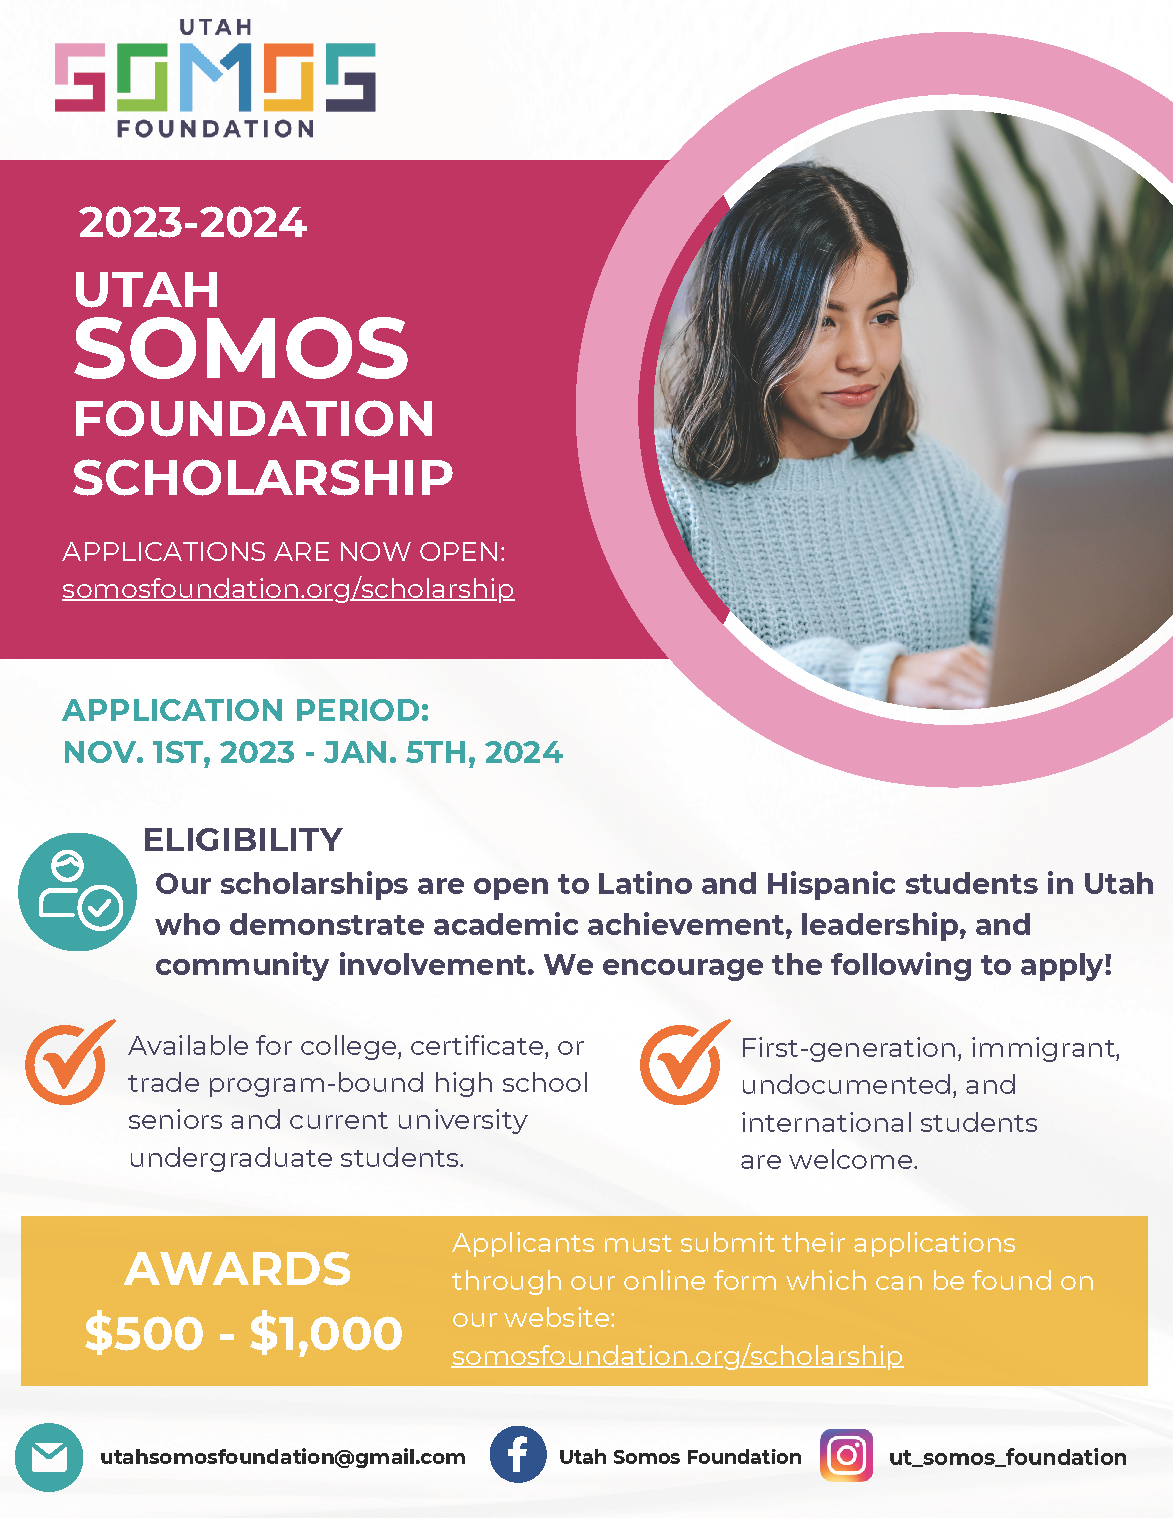 Utah Somos Foundation Scholarship Application Details 